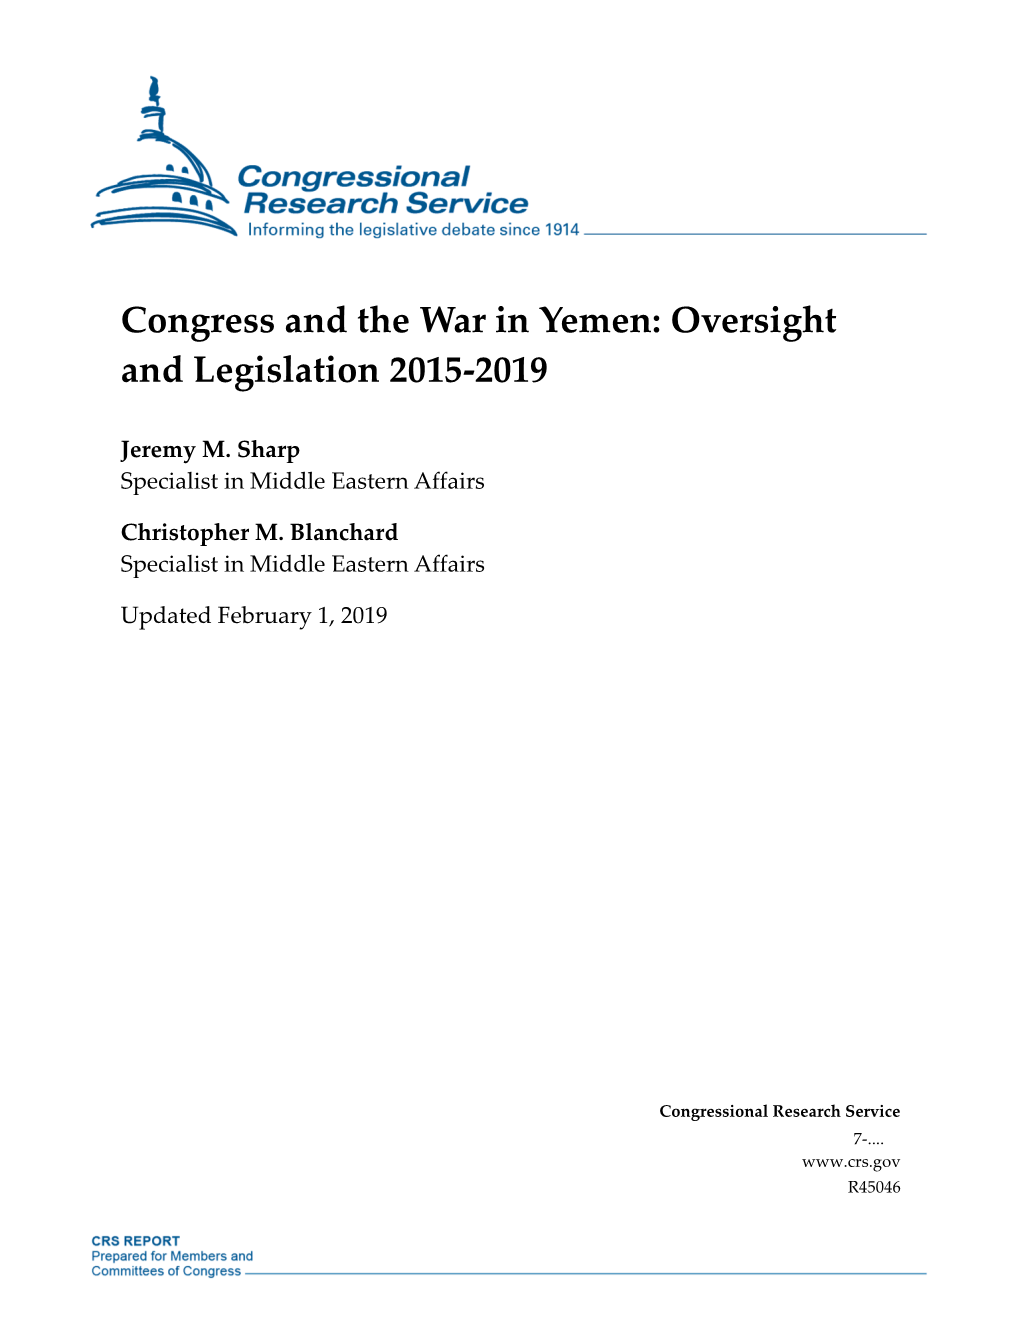 Congress and the War in Yemen: Oversight and Legislation 2015-2019